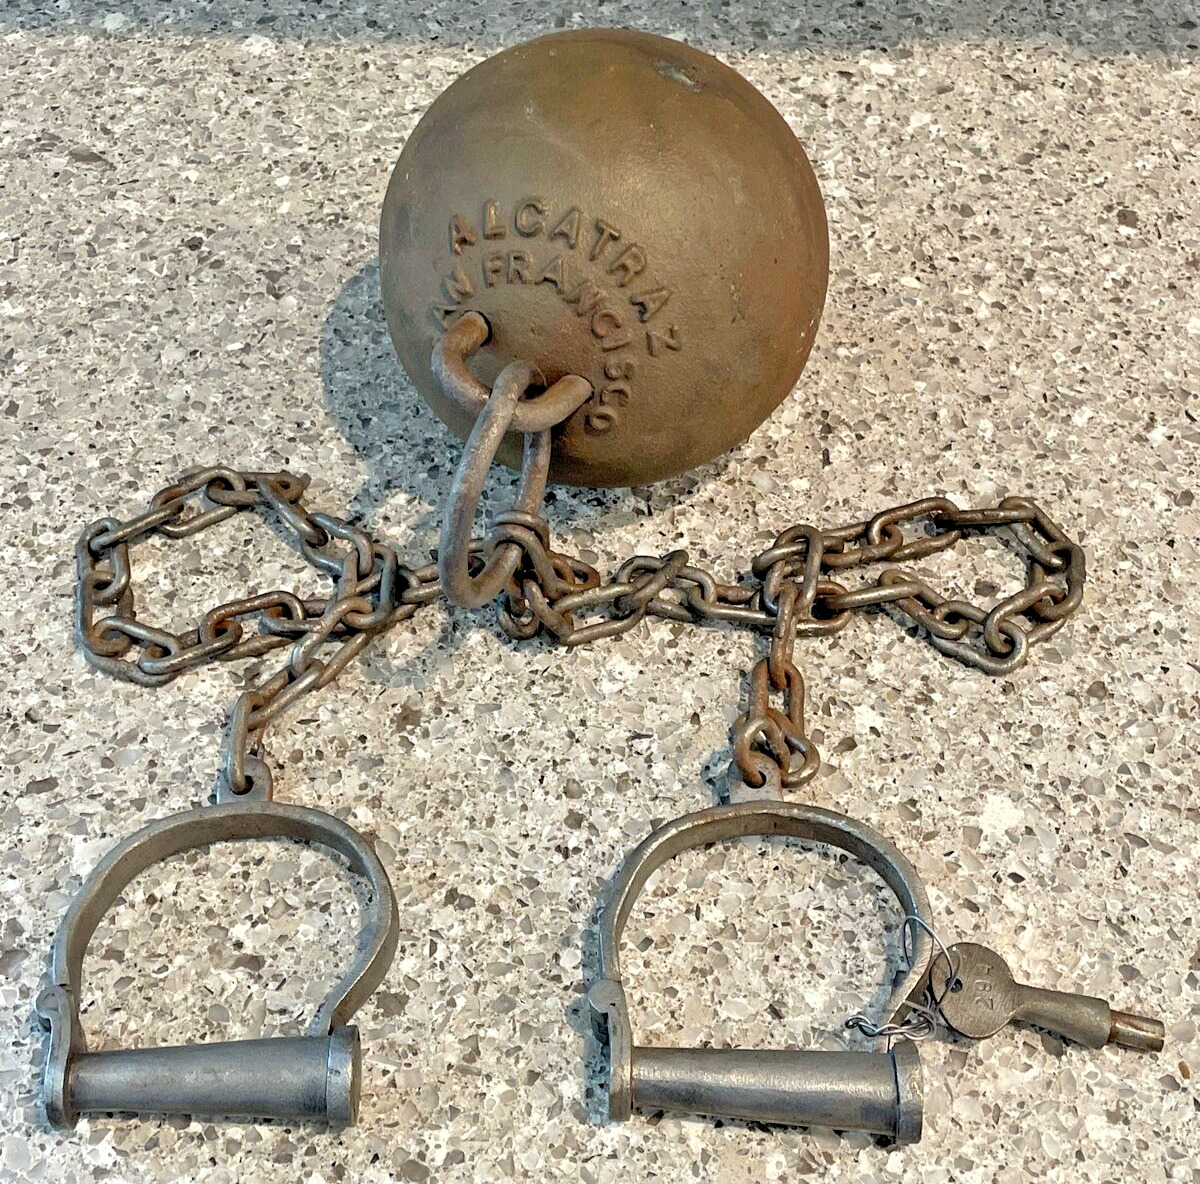 Alcatraz Ball & Chain Leg Irons Cuffs + Key Rare San Francisco Prison Artifact